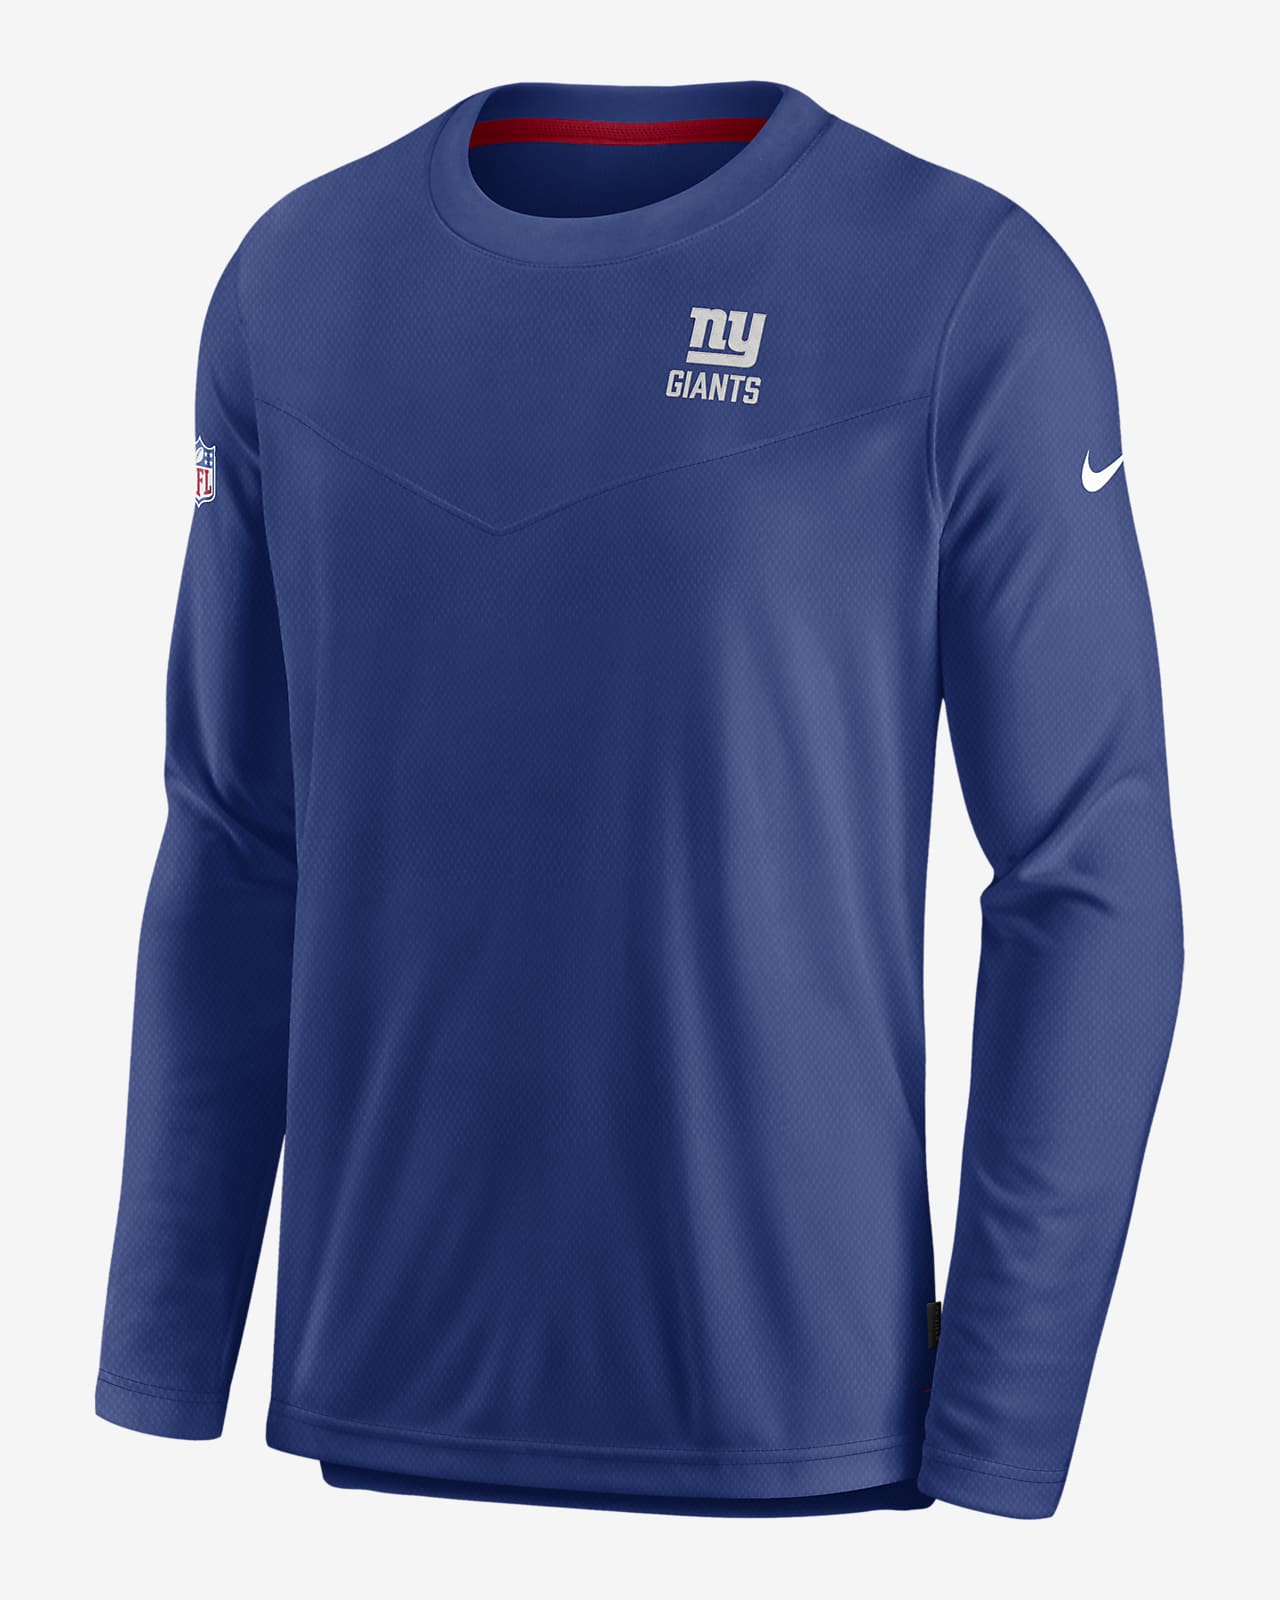 Nike Dri-FIT Lockup (NFL New York Giants) Men's Long-Sleeve Top